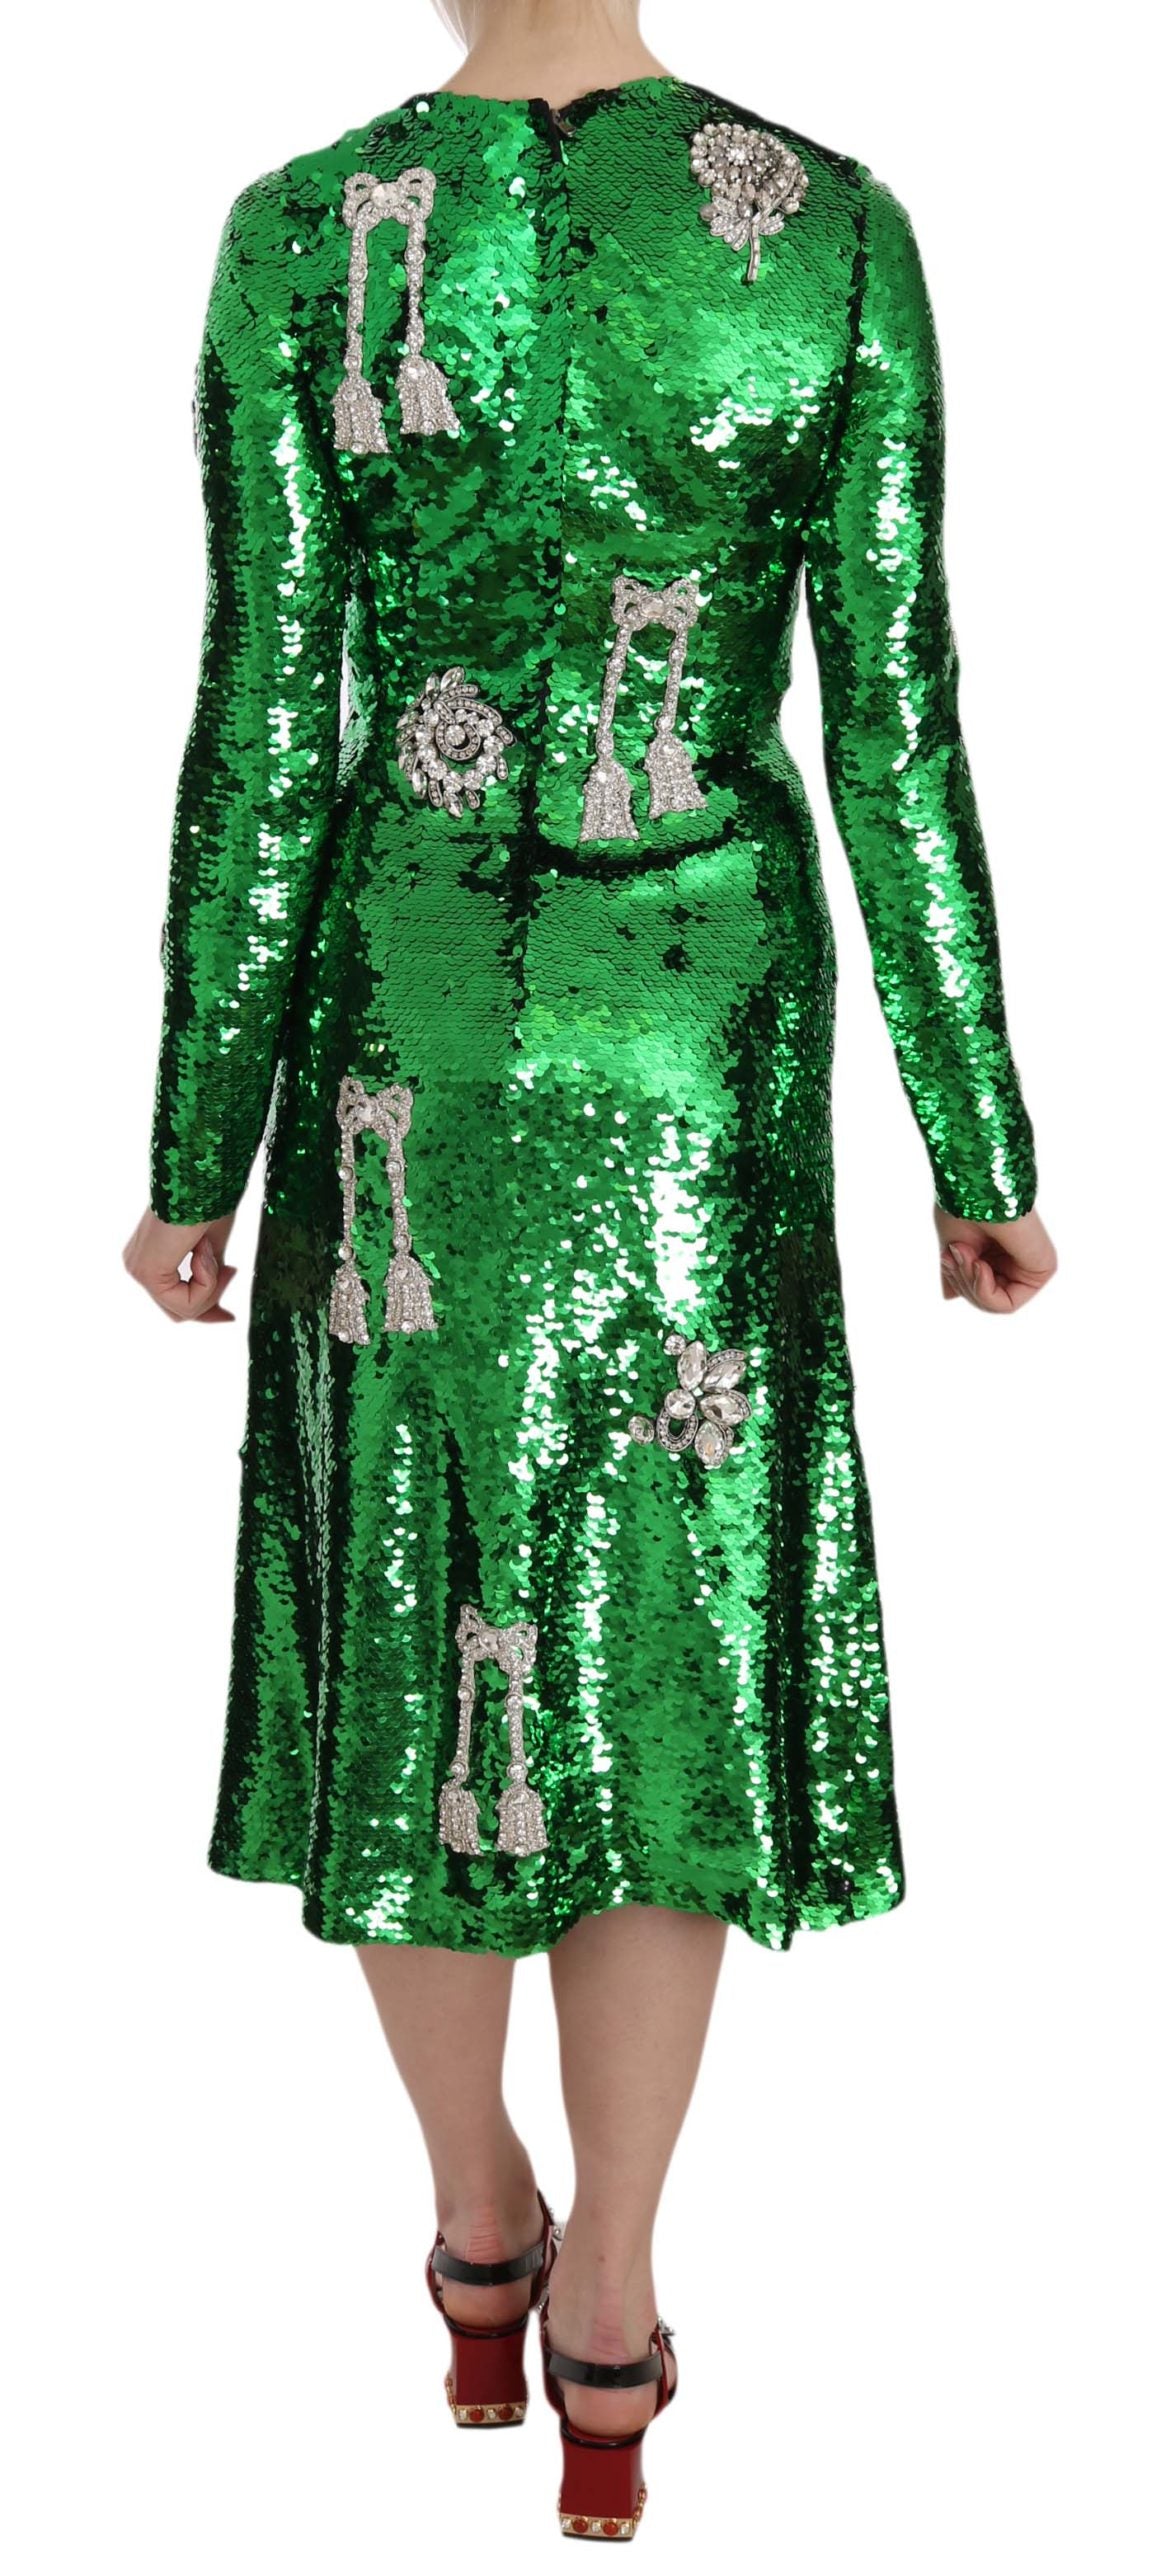 Dolce & Gabbana Green Sequin Swarovski Crystal Dress